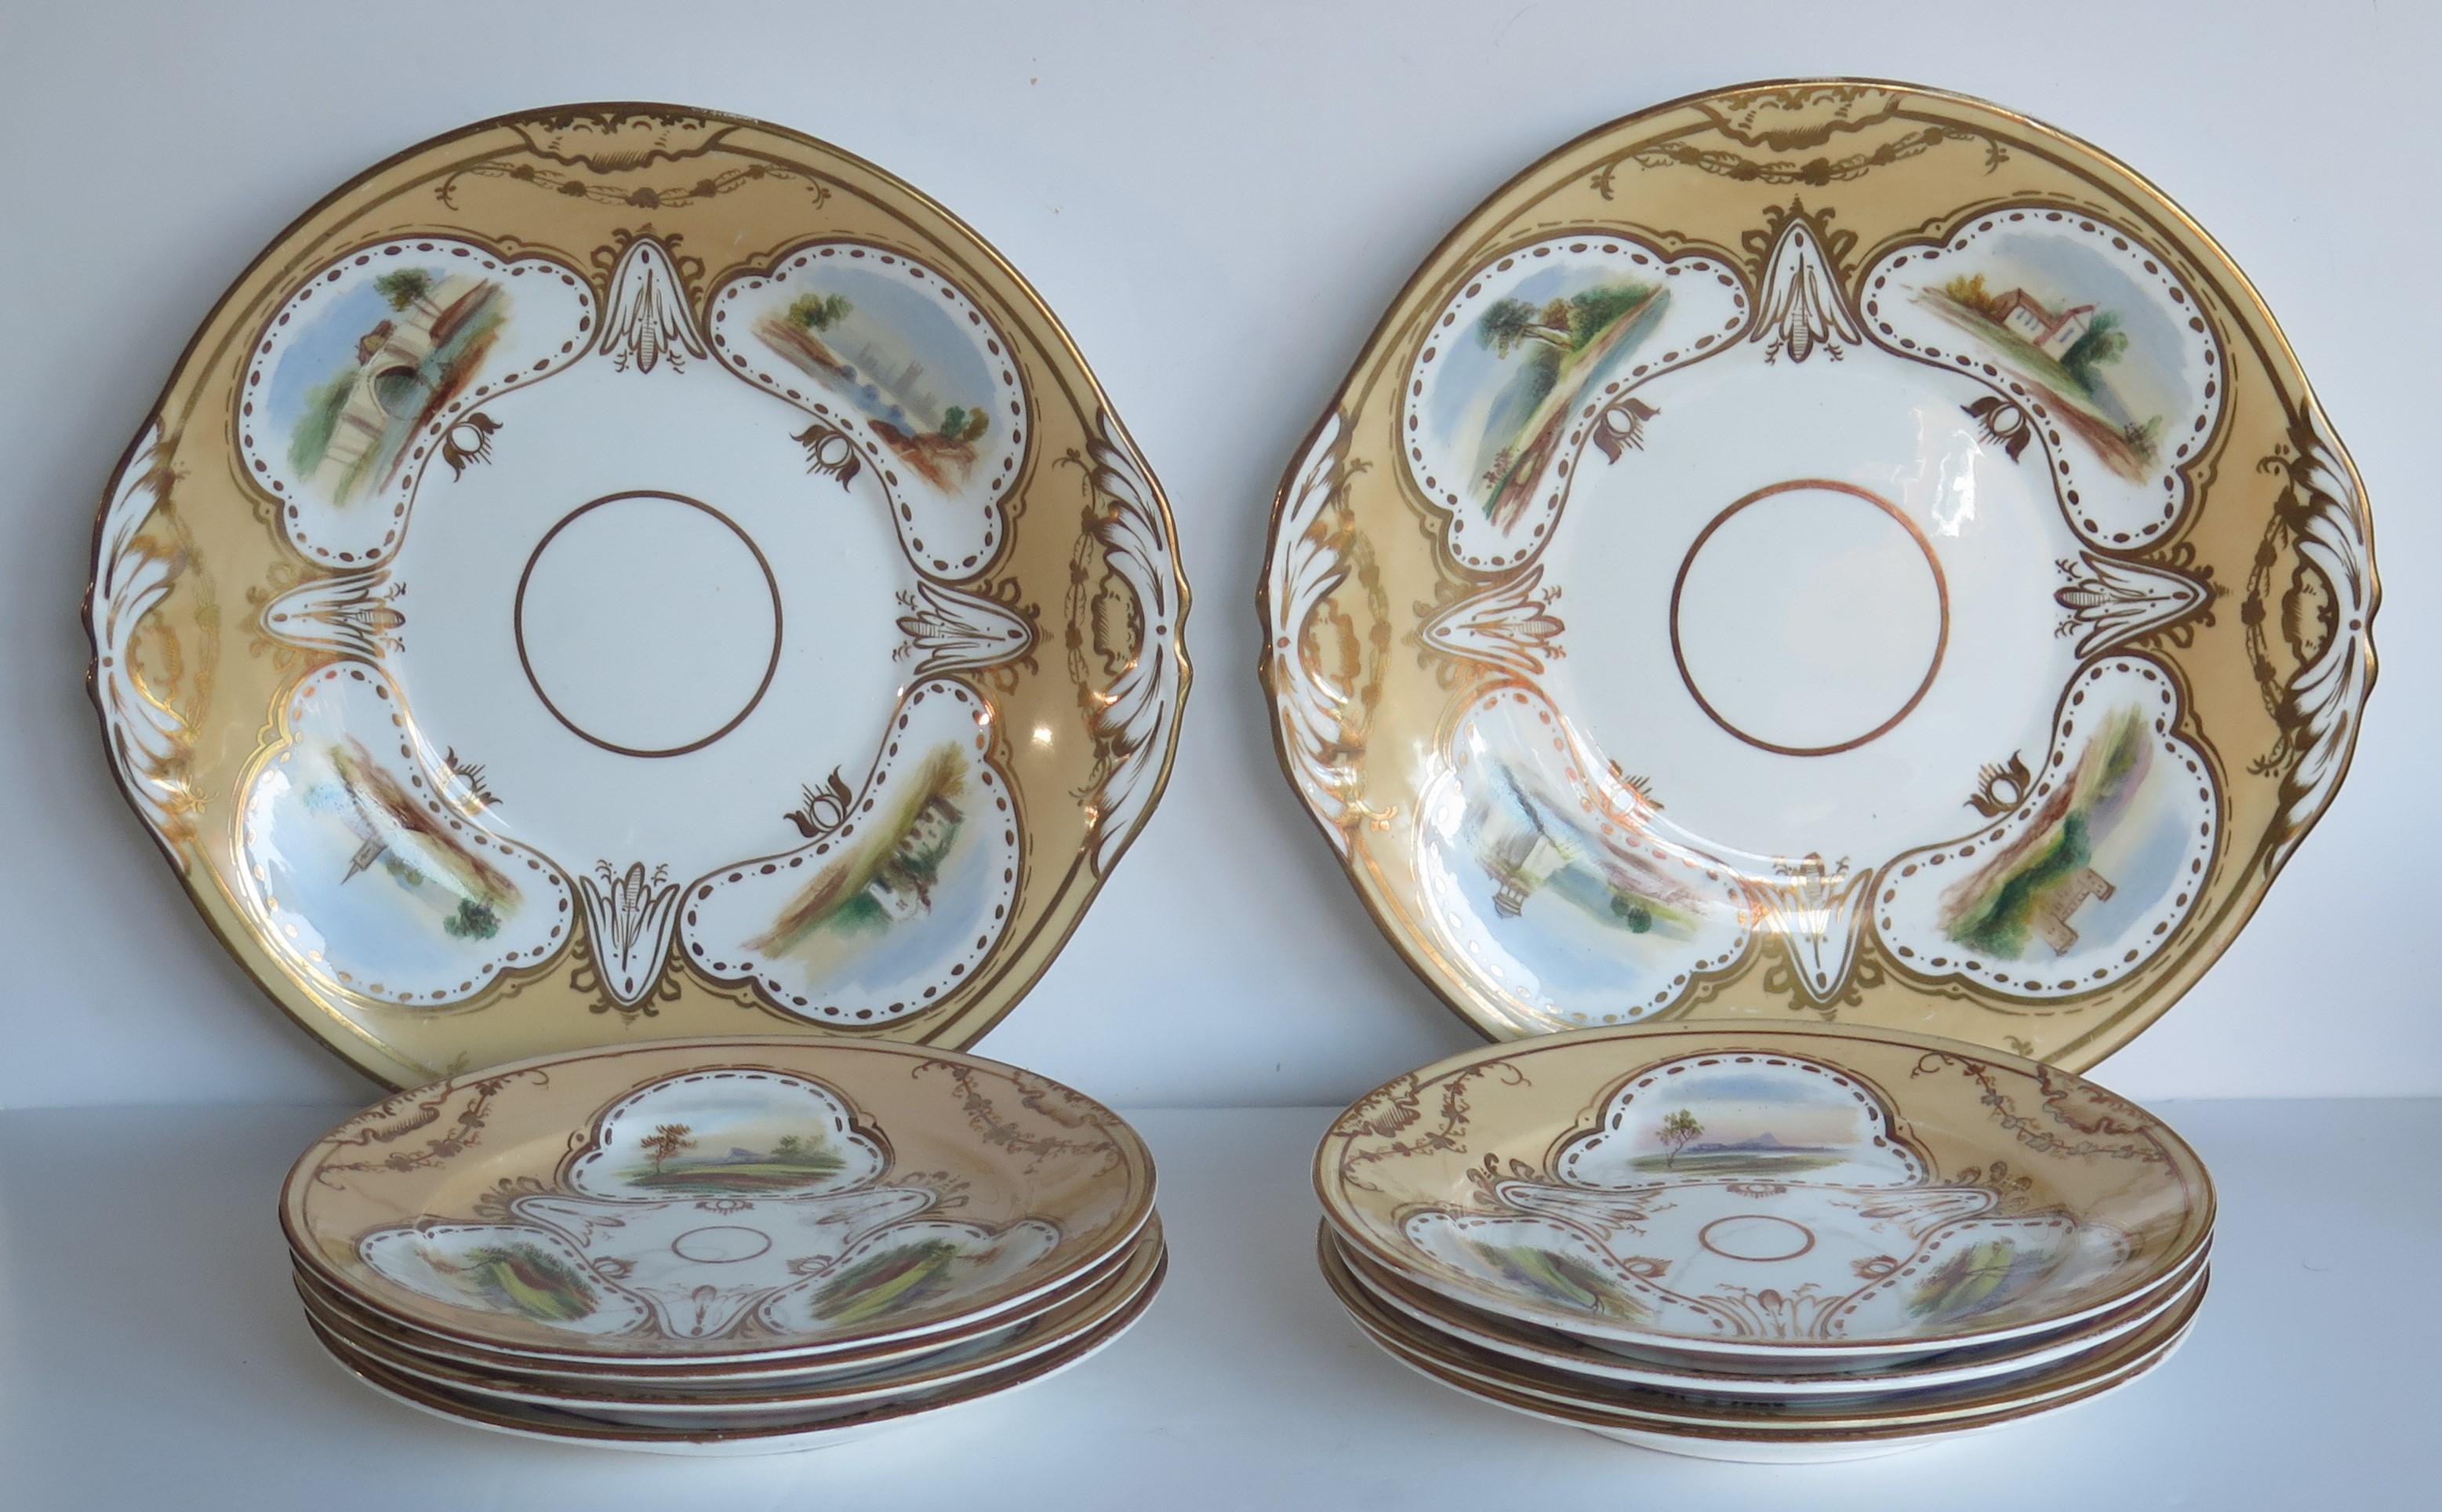 Regency Set of Ten Desert Plates by Rockingham porcelain Hand Painted Scenes, Circa 1825 For Sale